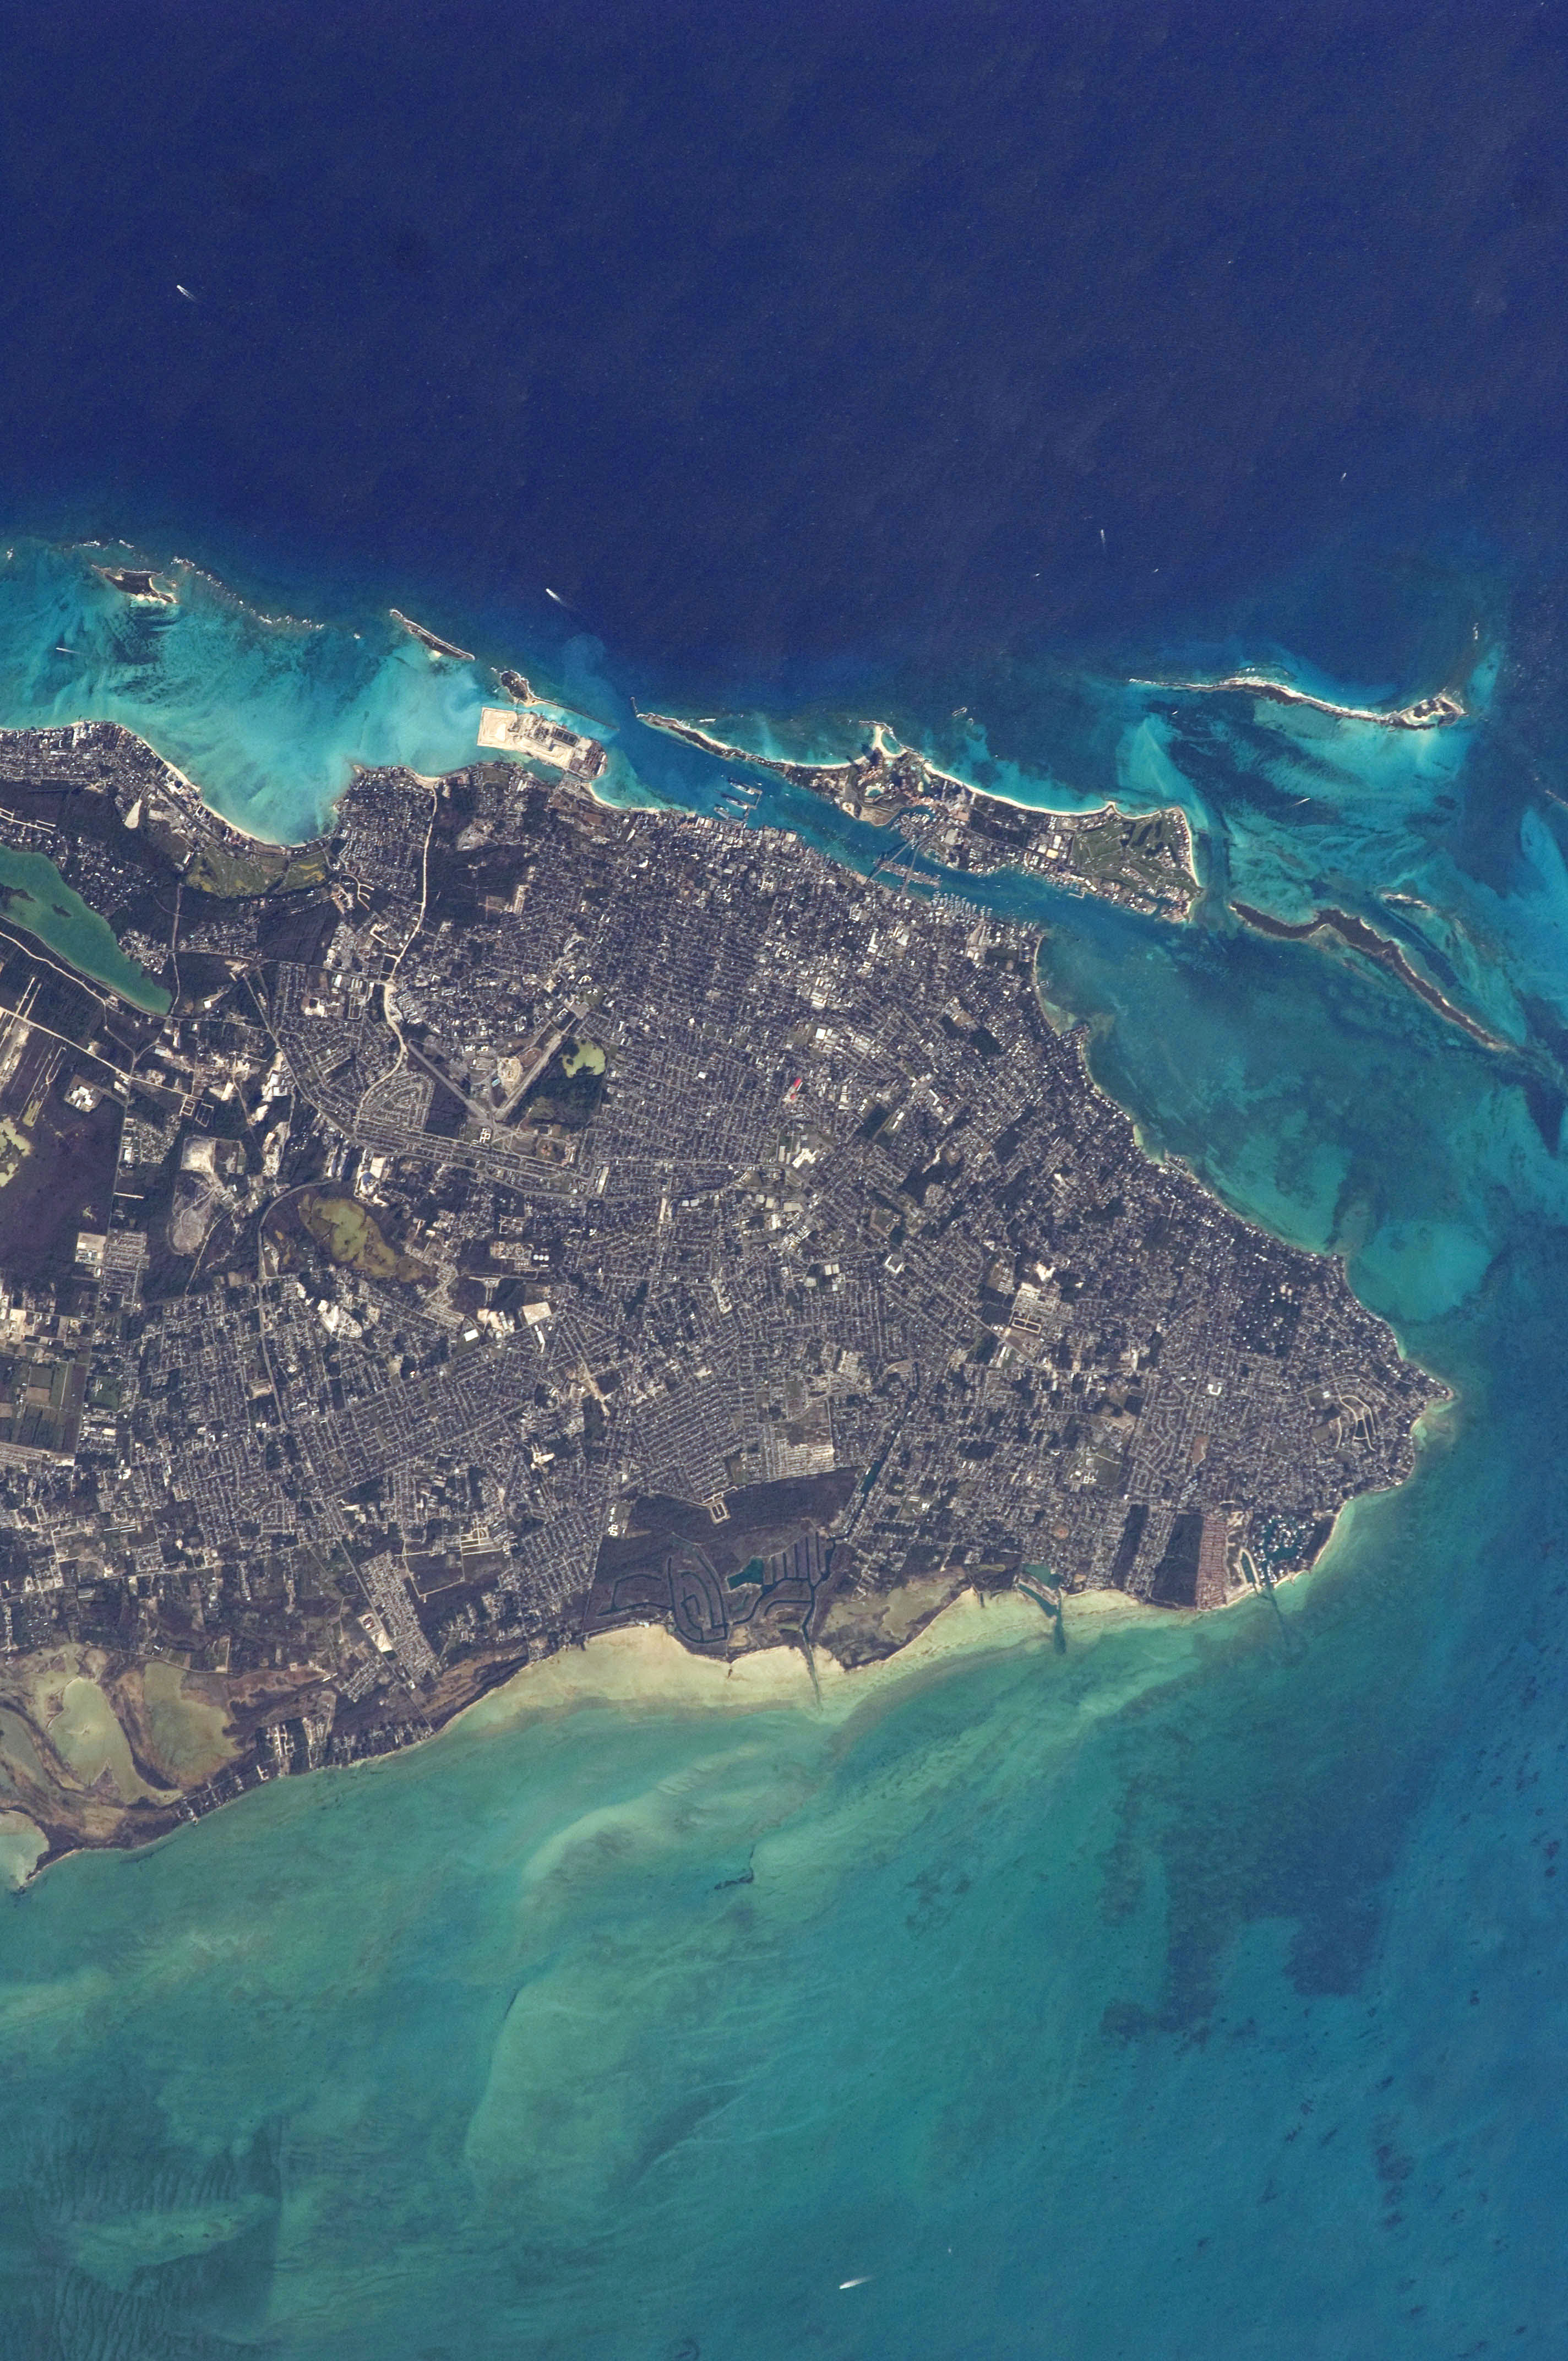 FileNassau, The Bahamas.jpg Wikimedia Commons